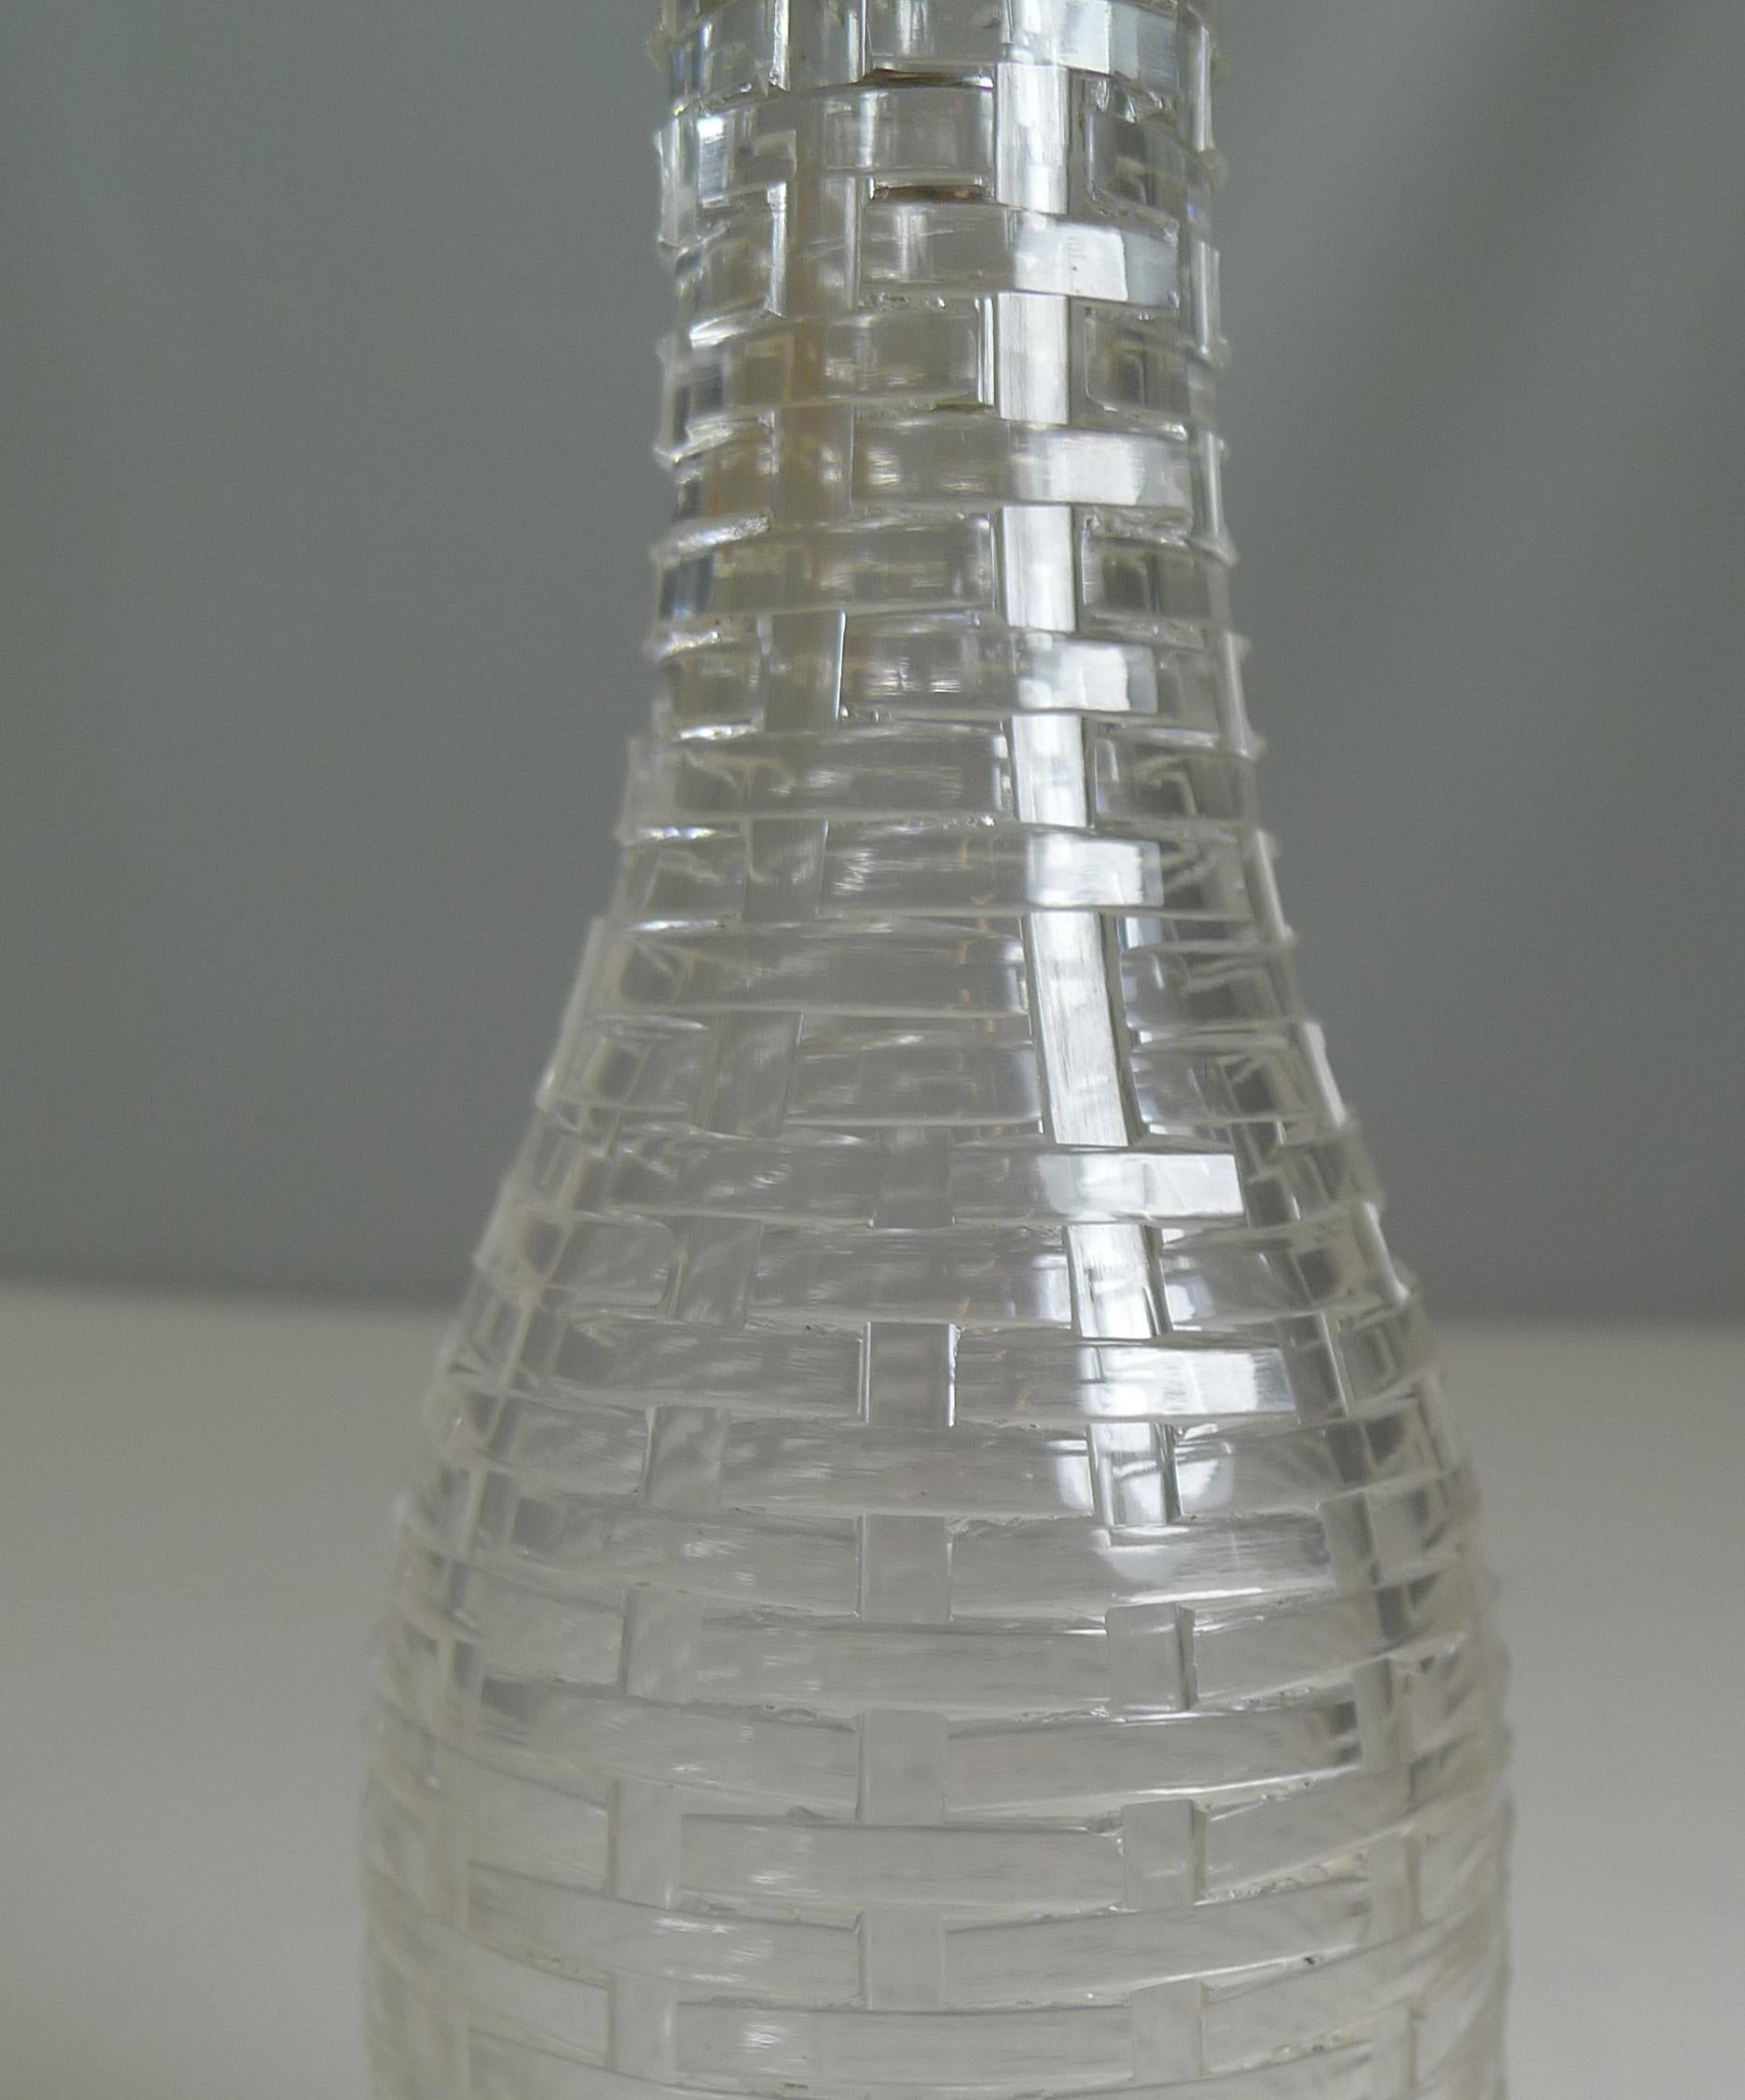 antique glass liquor bottles